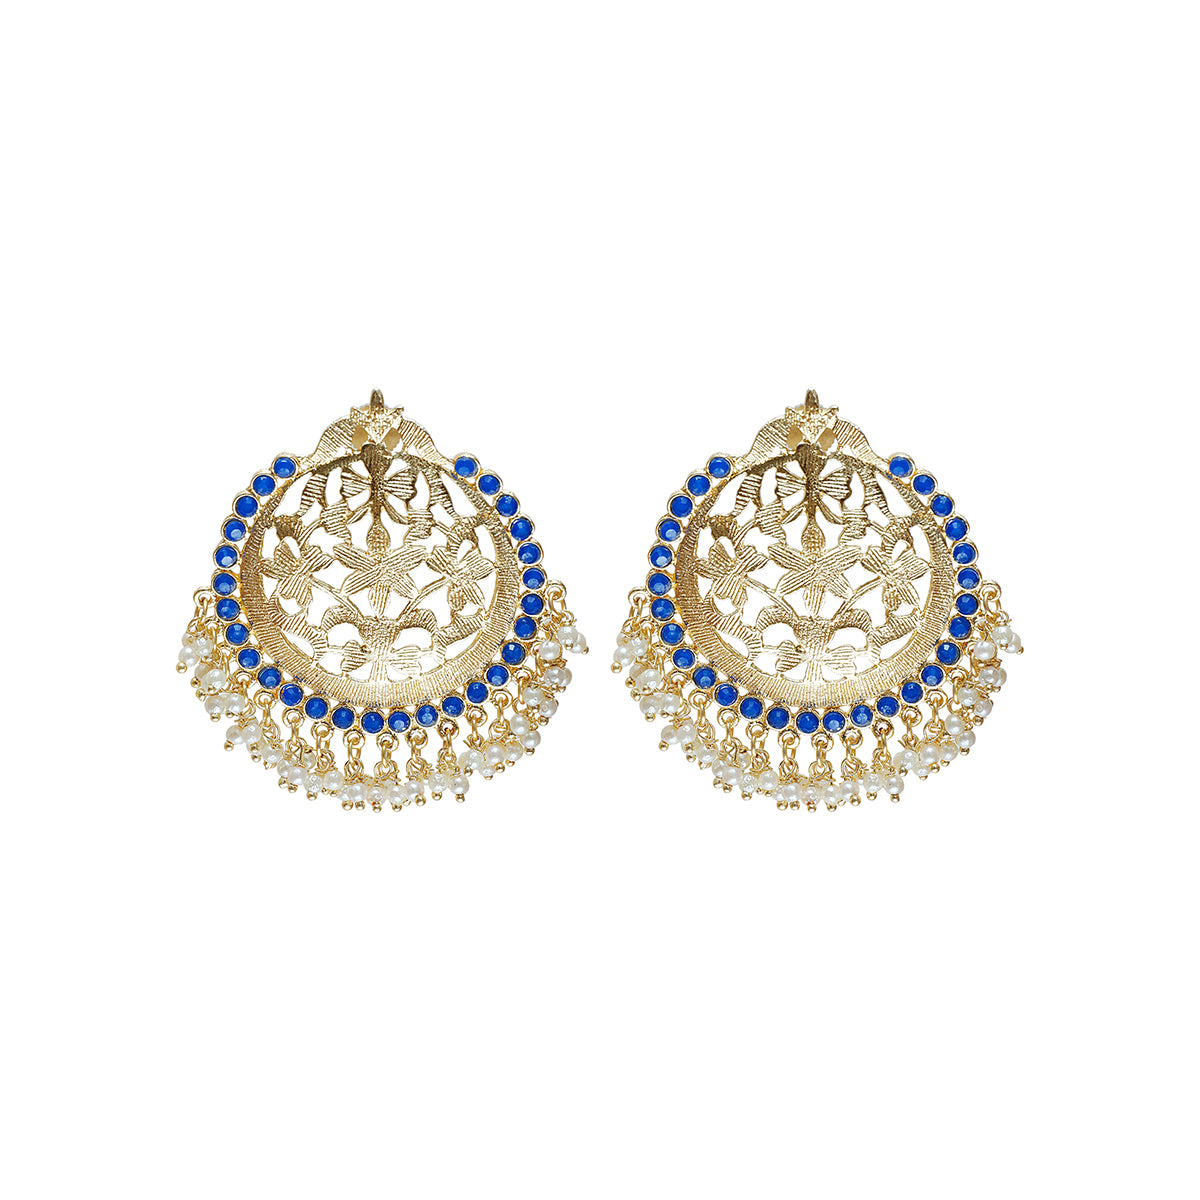 Steel earrings - white Shamballa balls, zircons in clear colour, 8 mm |  Jewelry Eshop